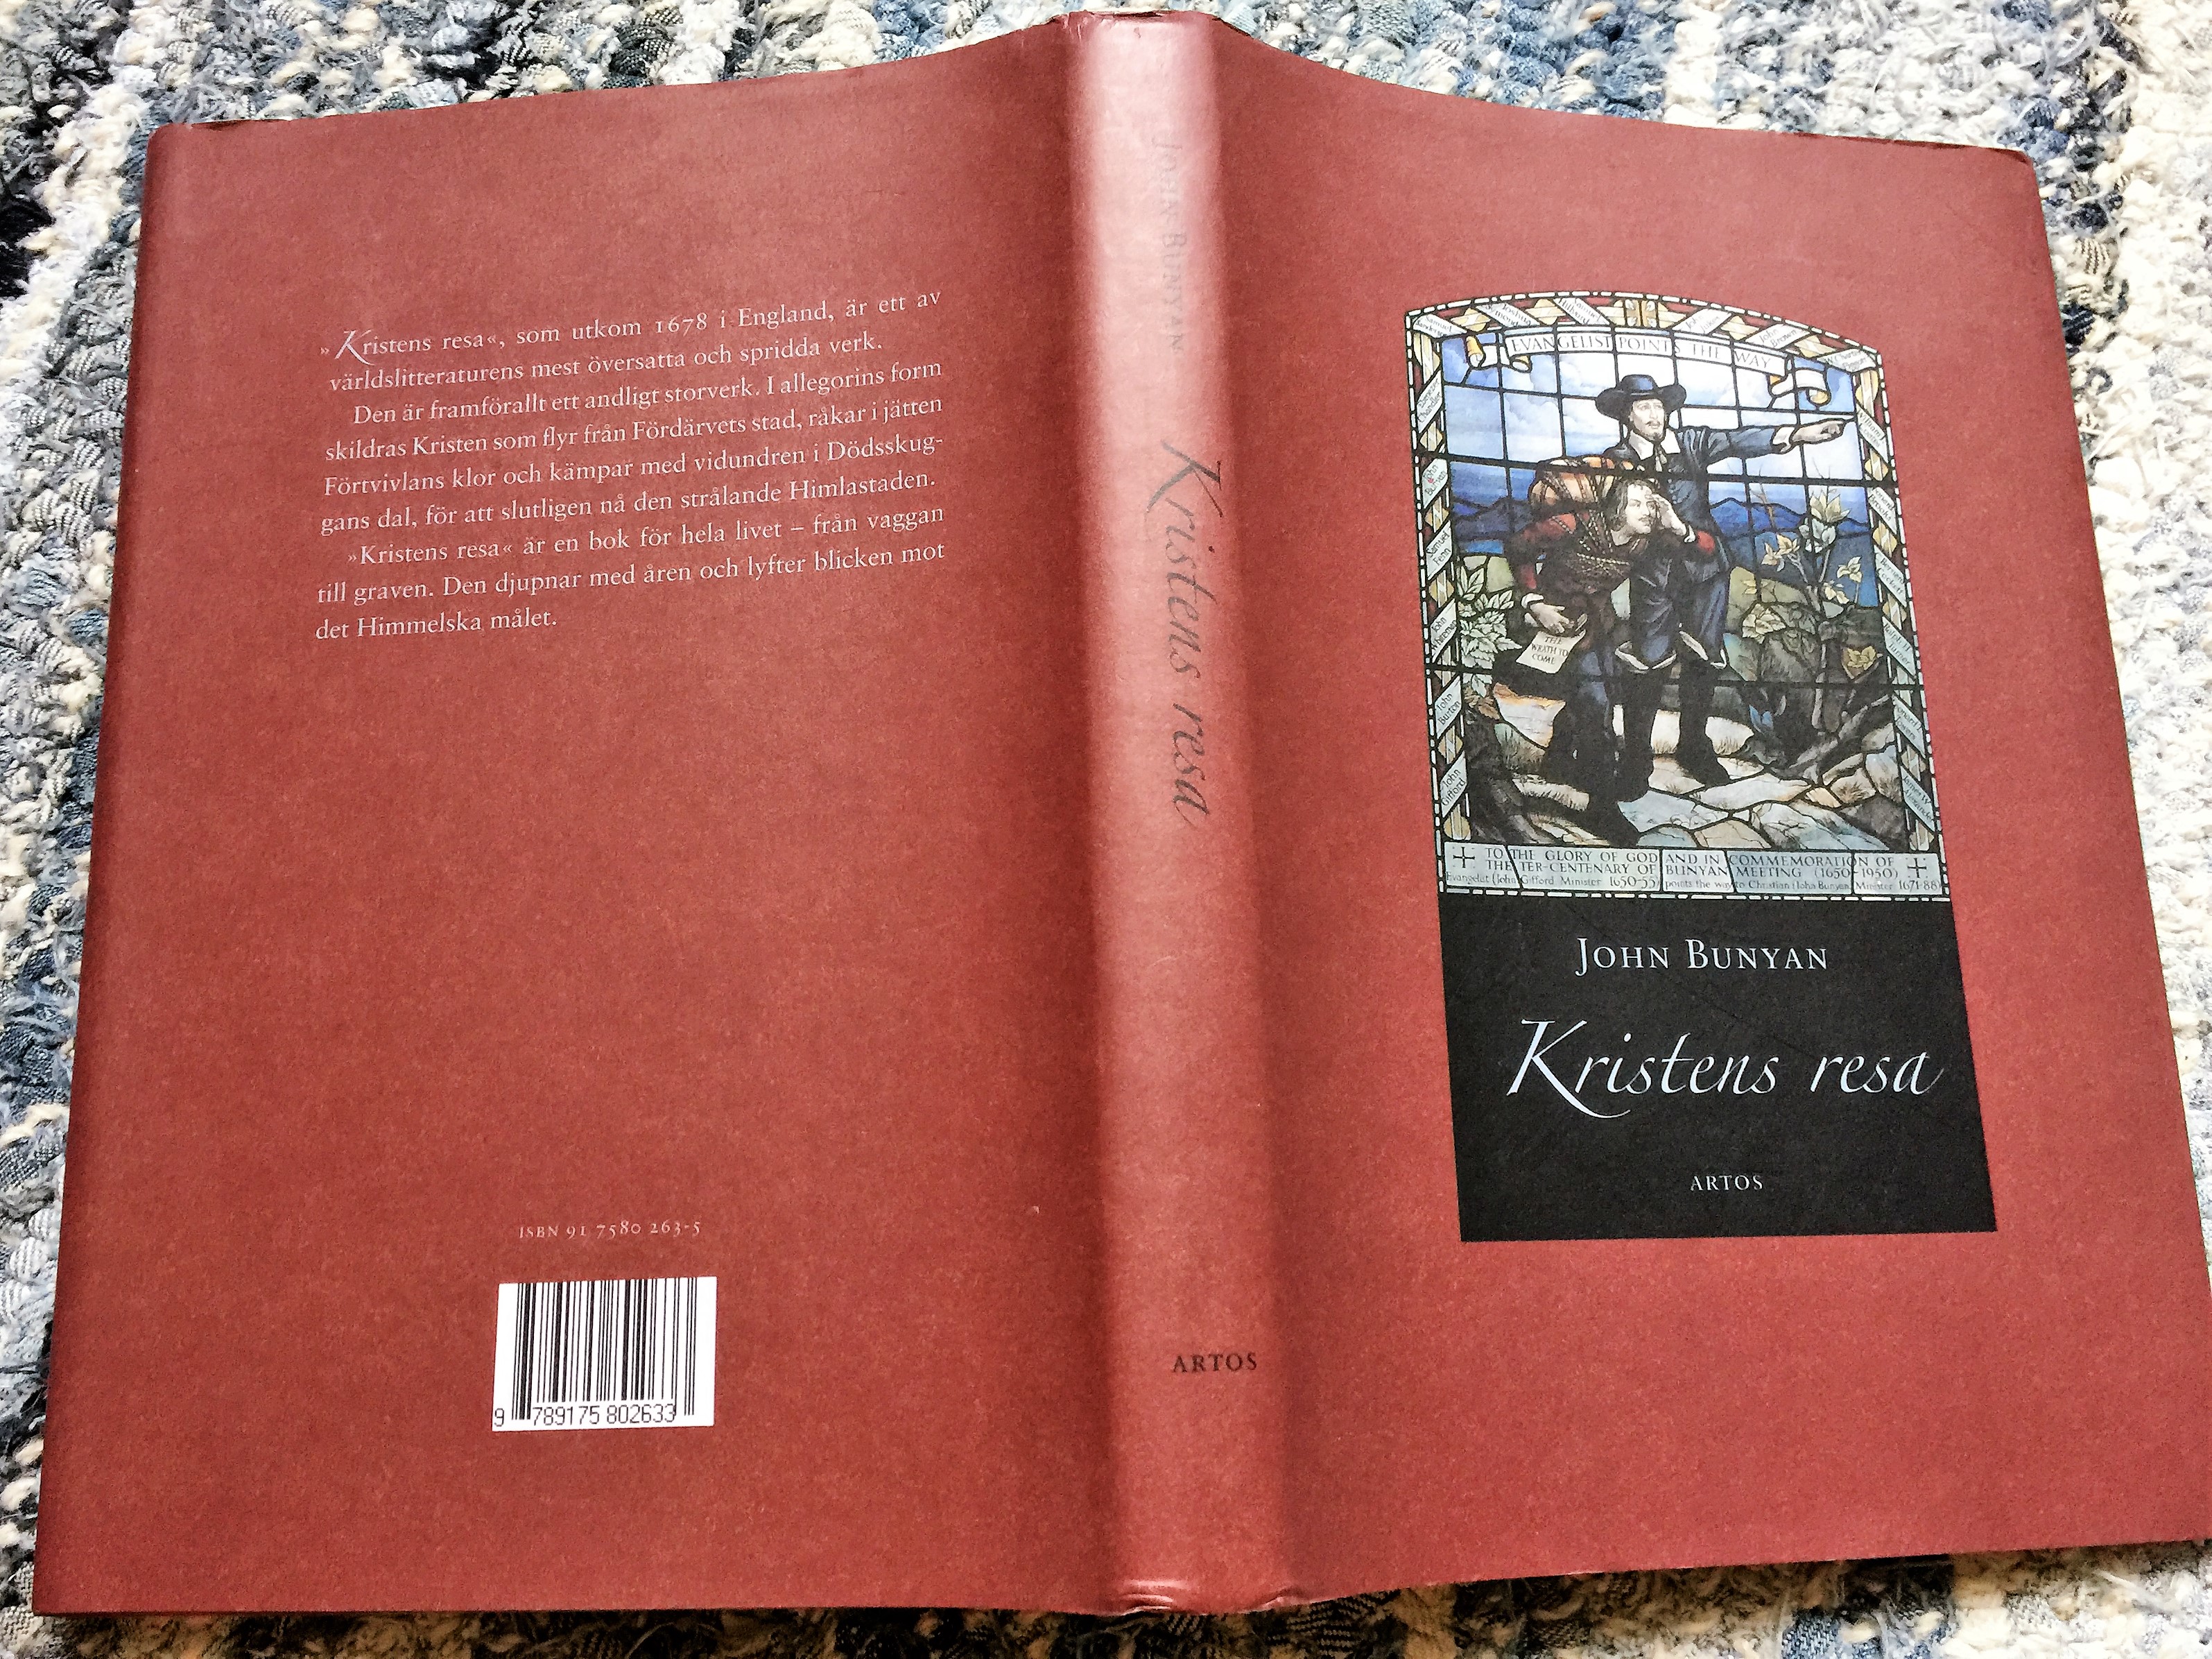 Kristens resa by John Bunyan - Swedish edition of the Pilgrim's Progress 1